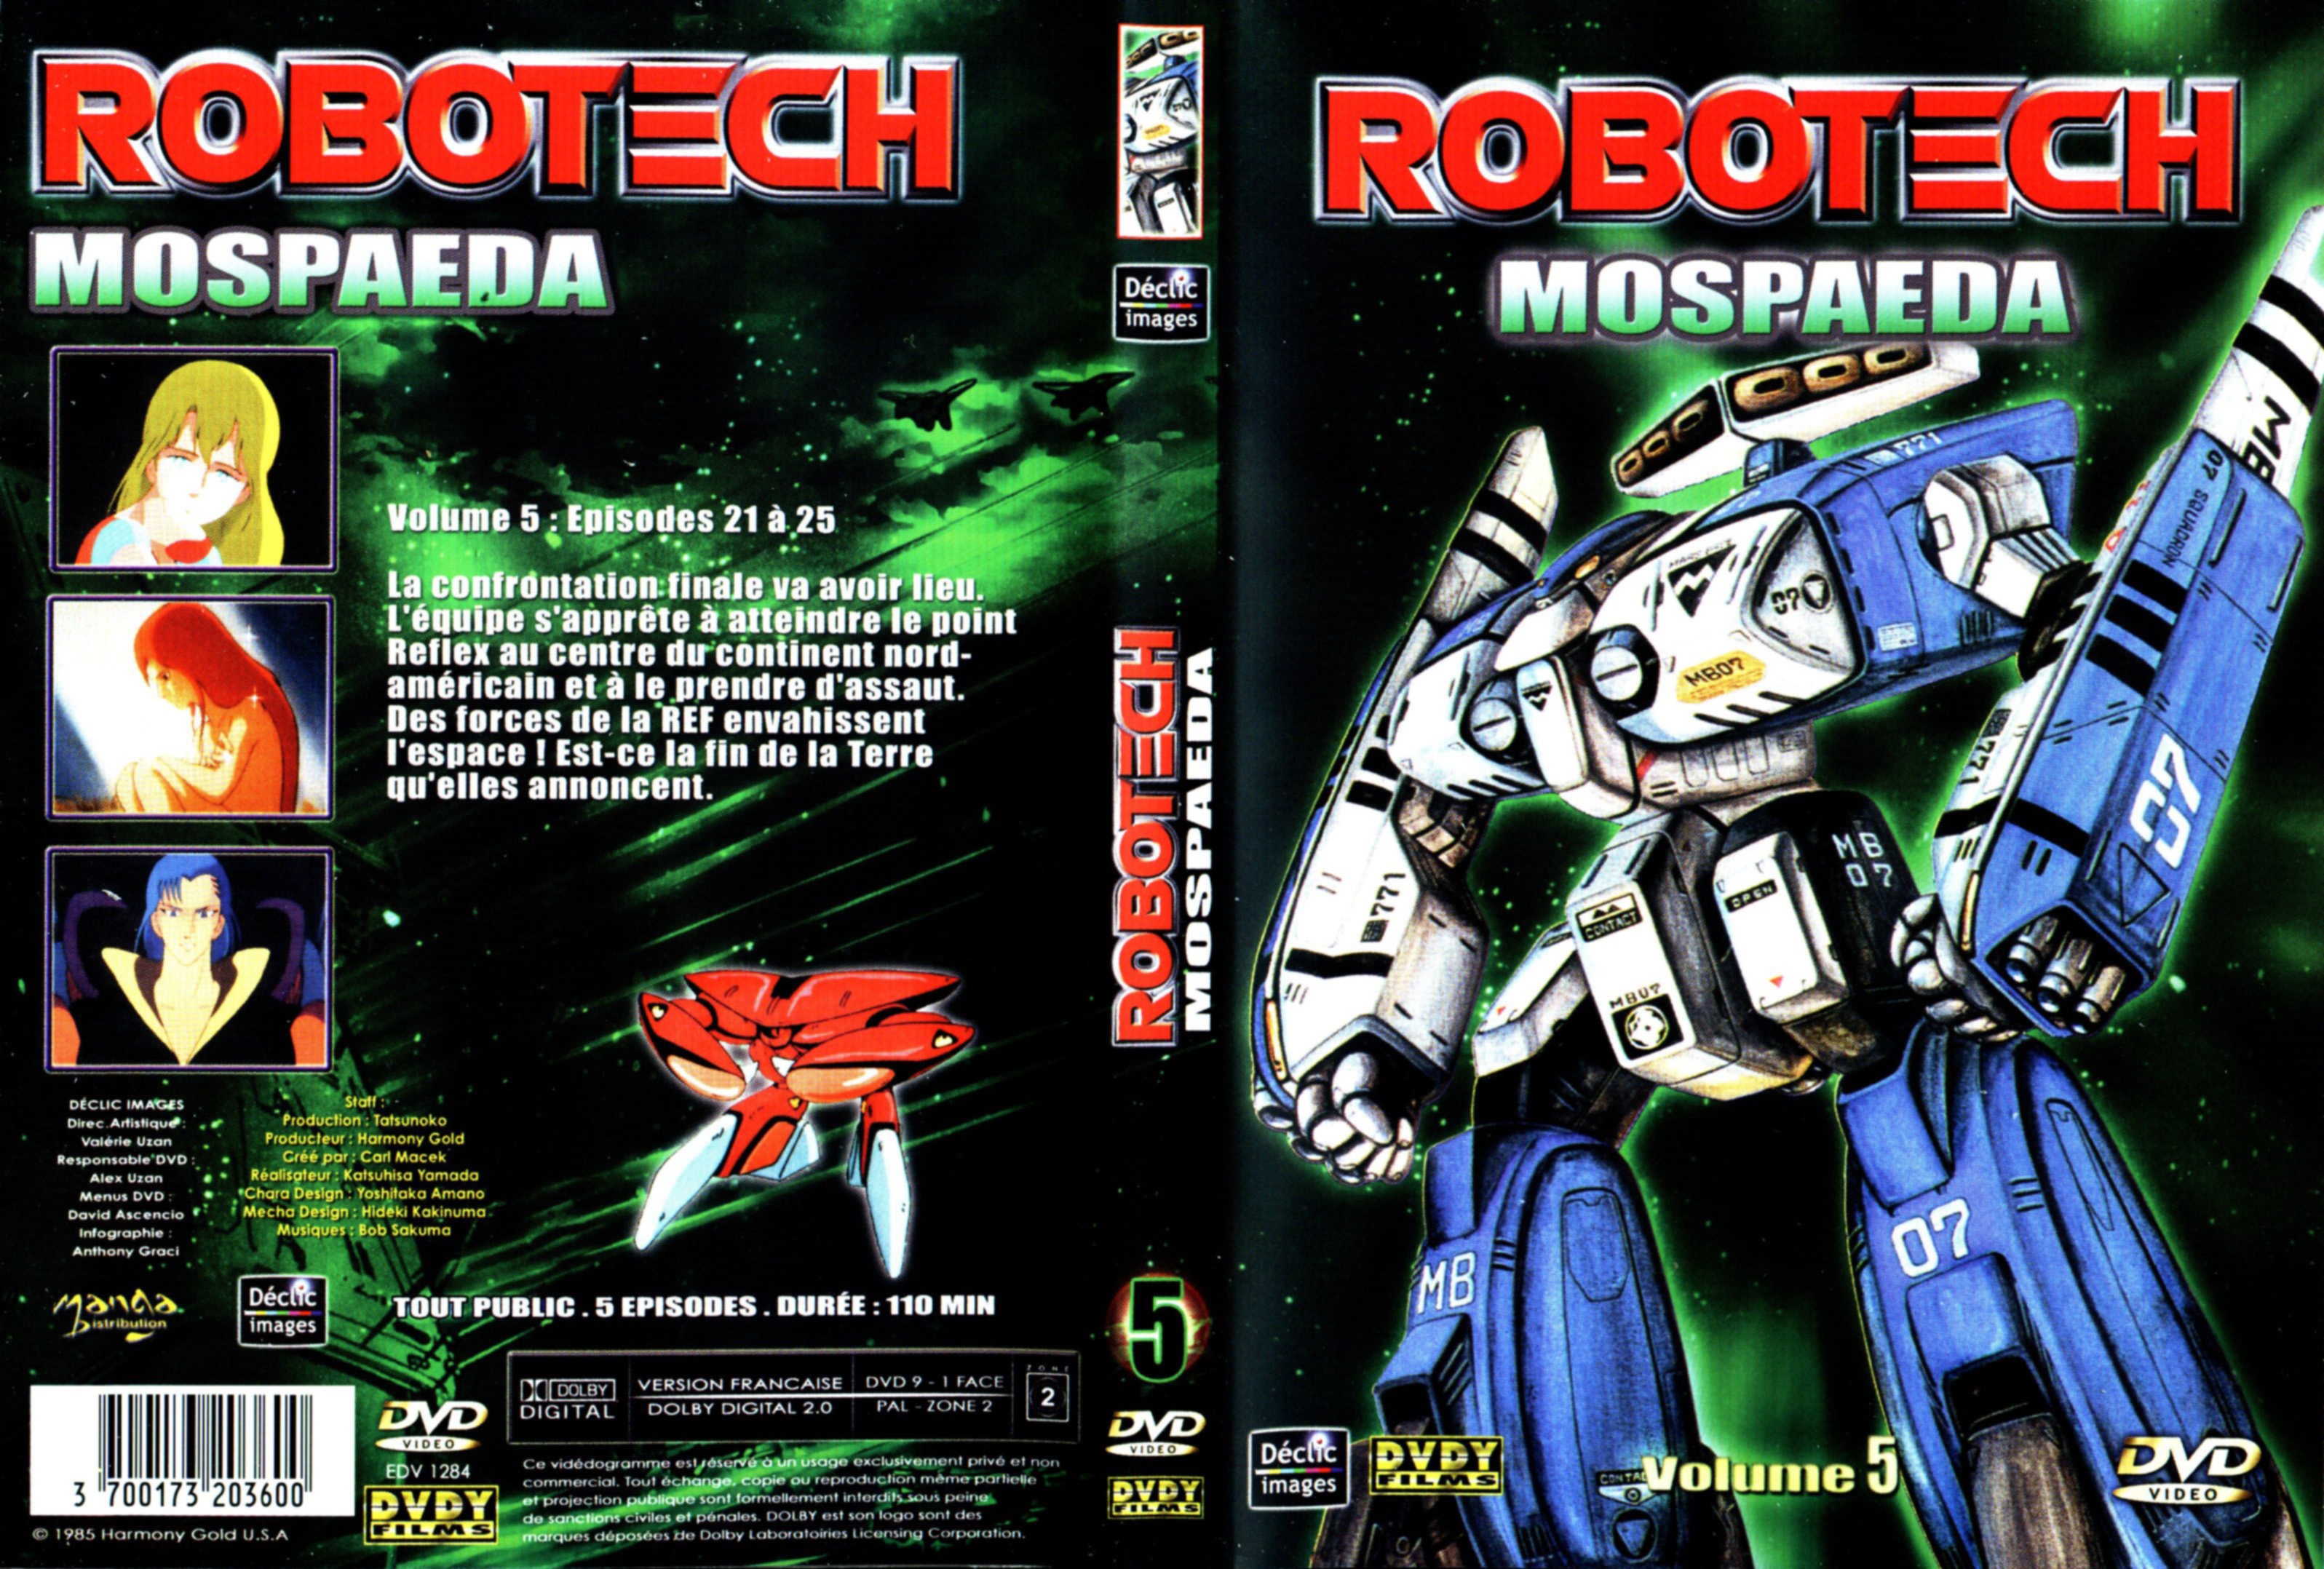 Jaquette DVD Robotech Mospaeda vol 05